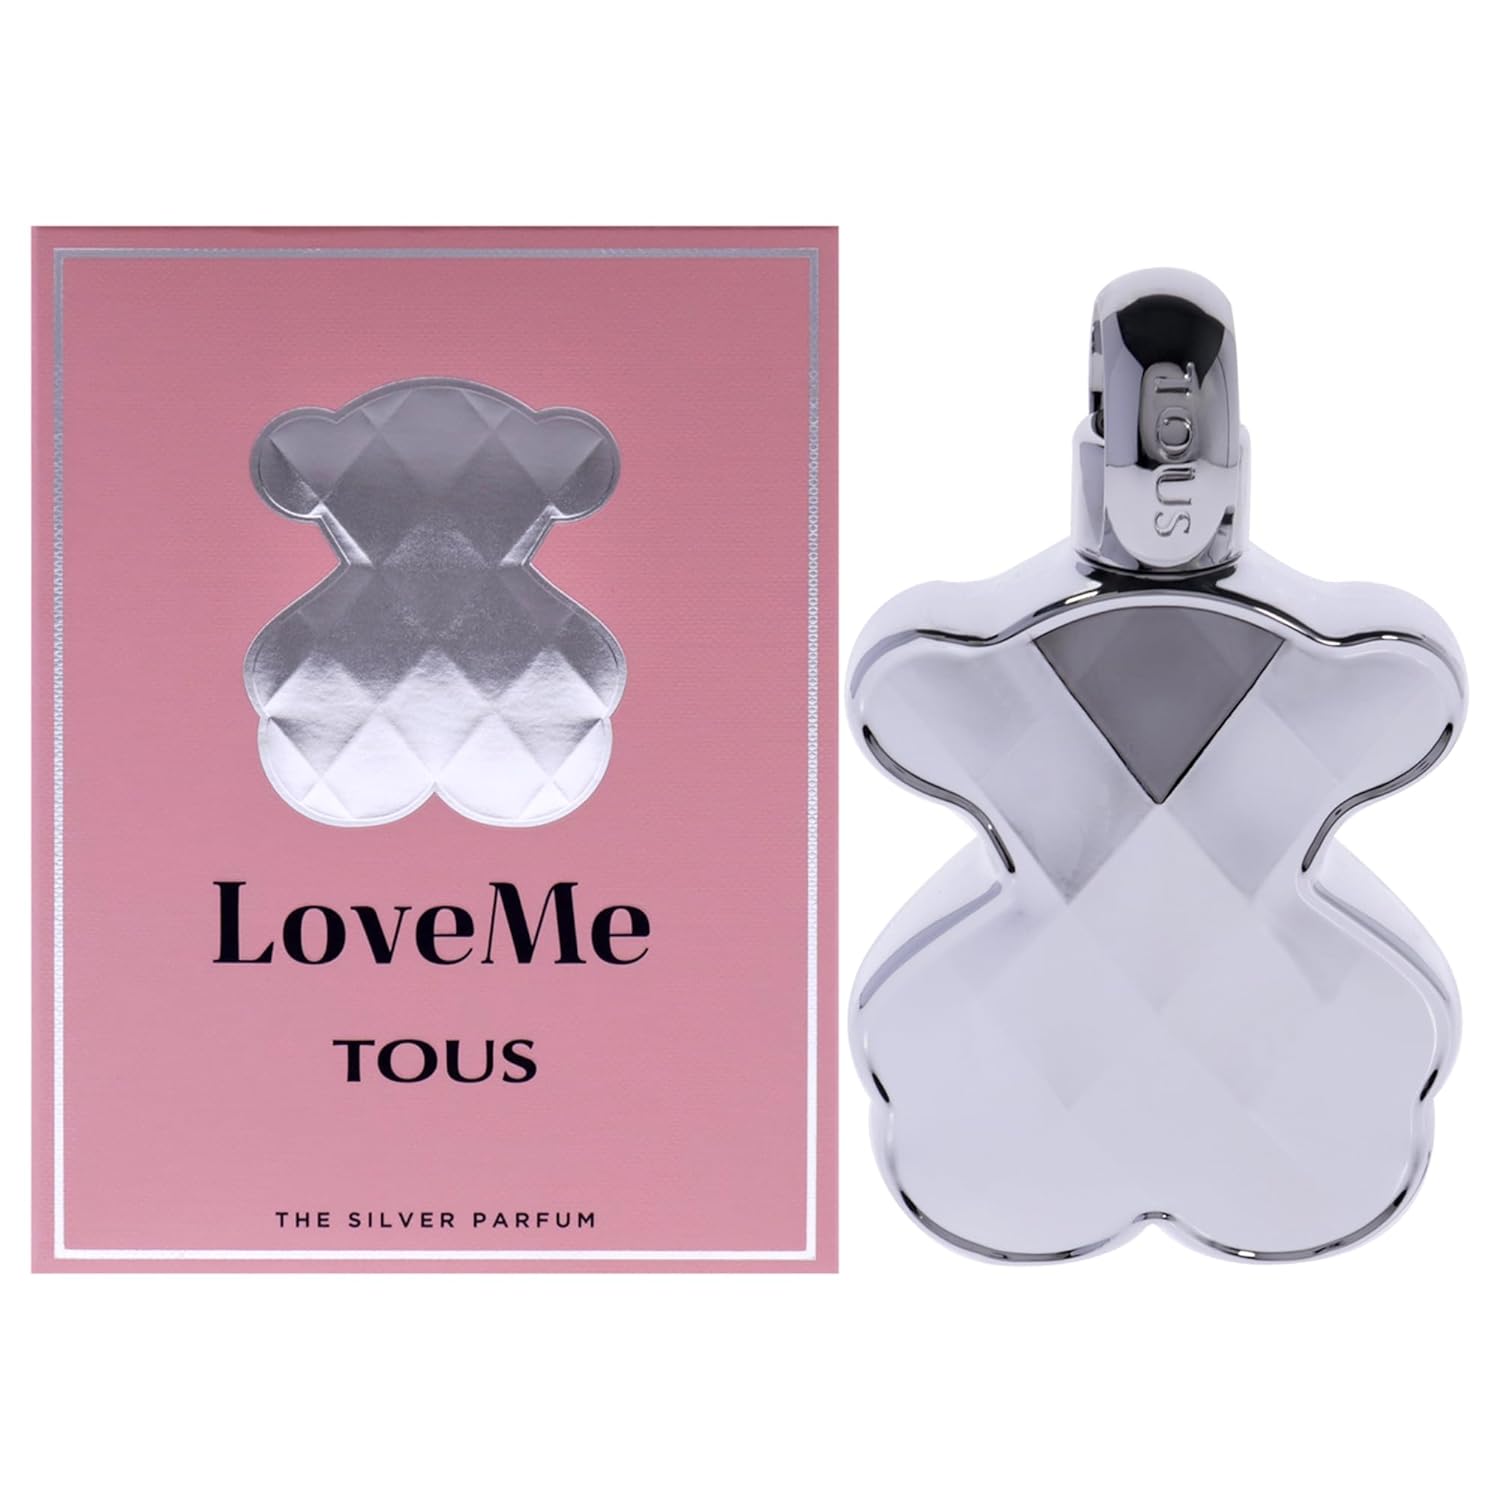 LoveMe The Silver Parfum by Tous 3.0 oz EDP Spray for Women